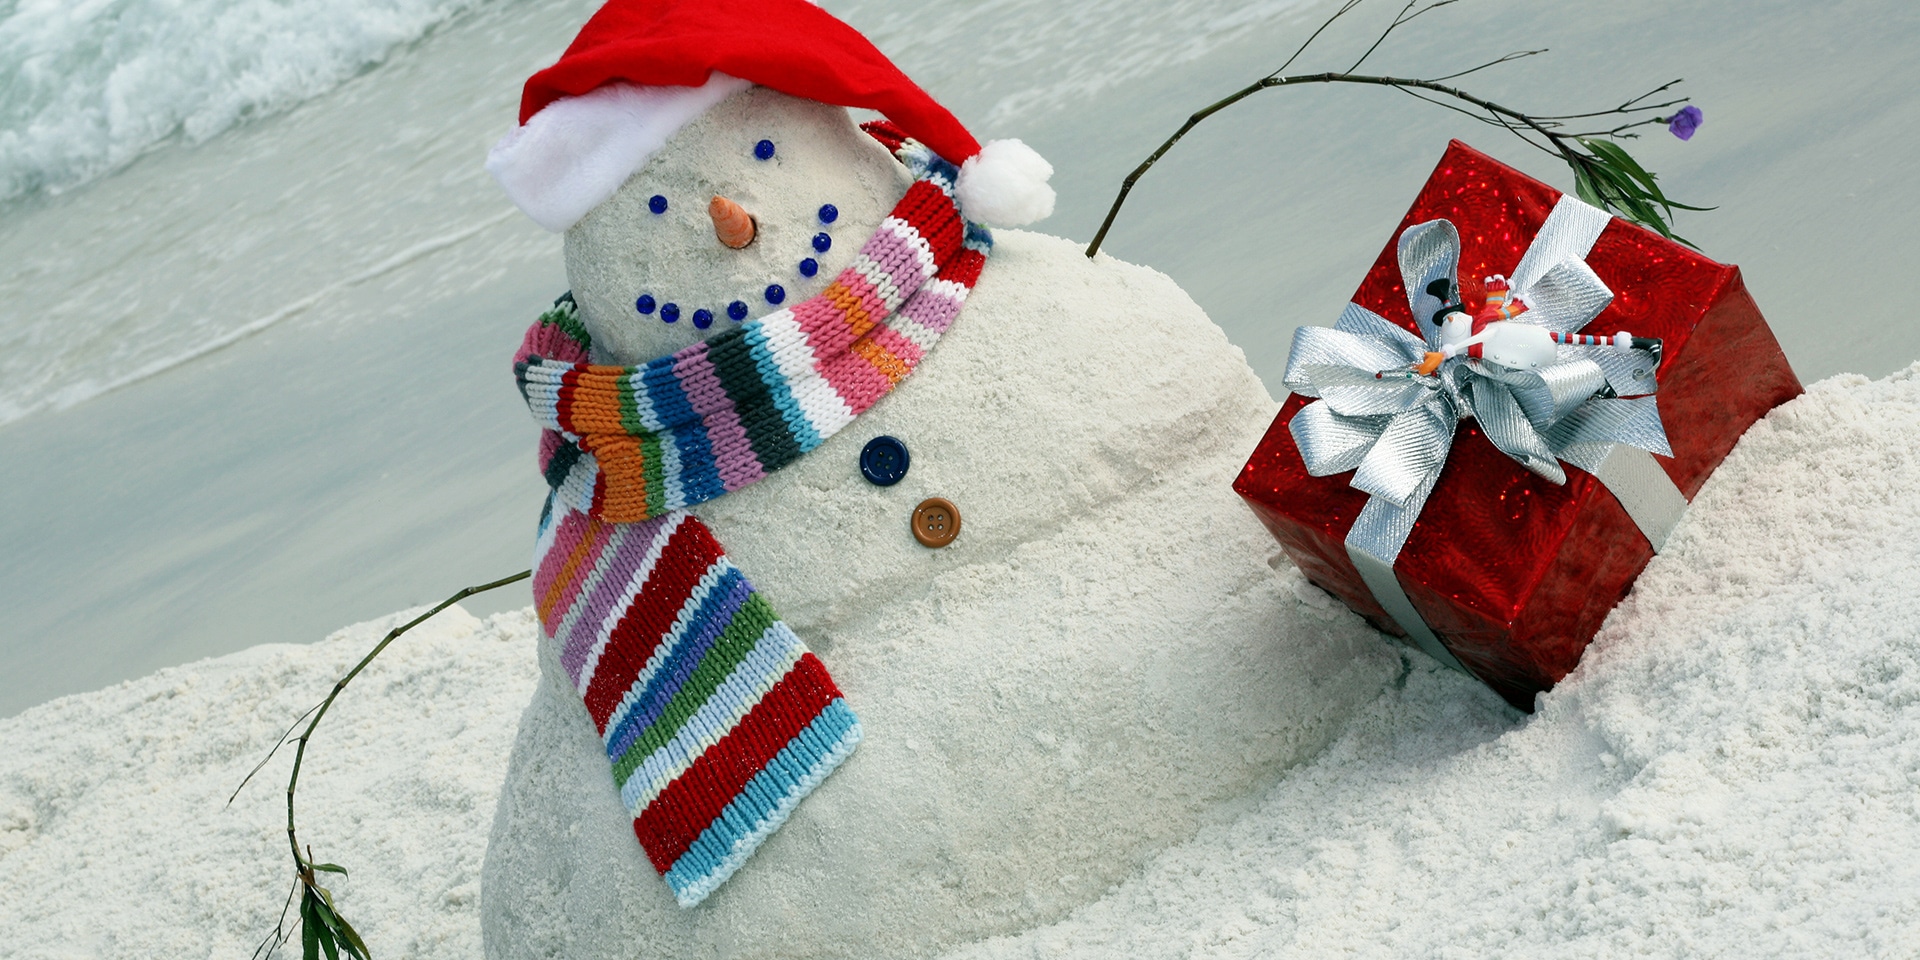 snowman made of sand dressed like santa